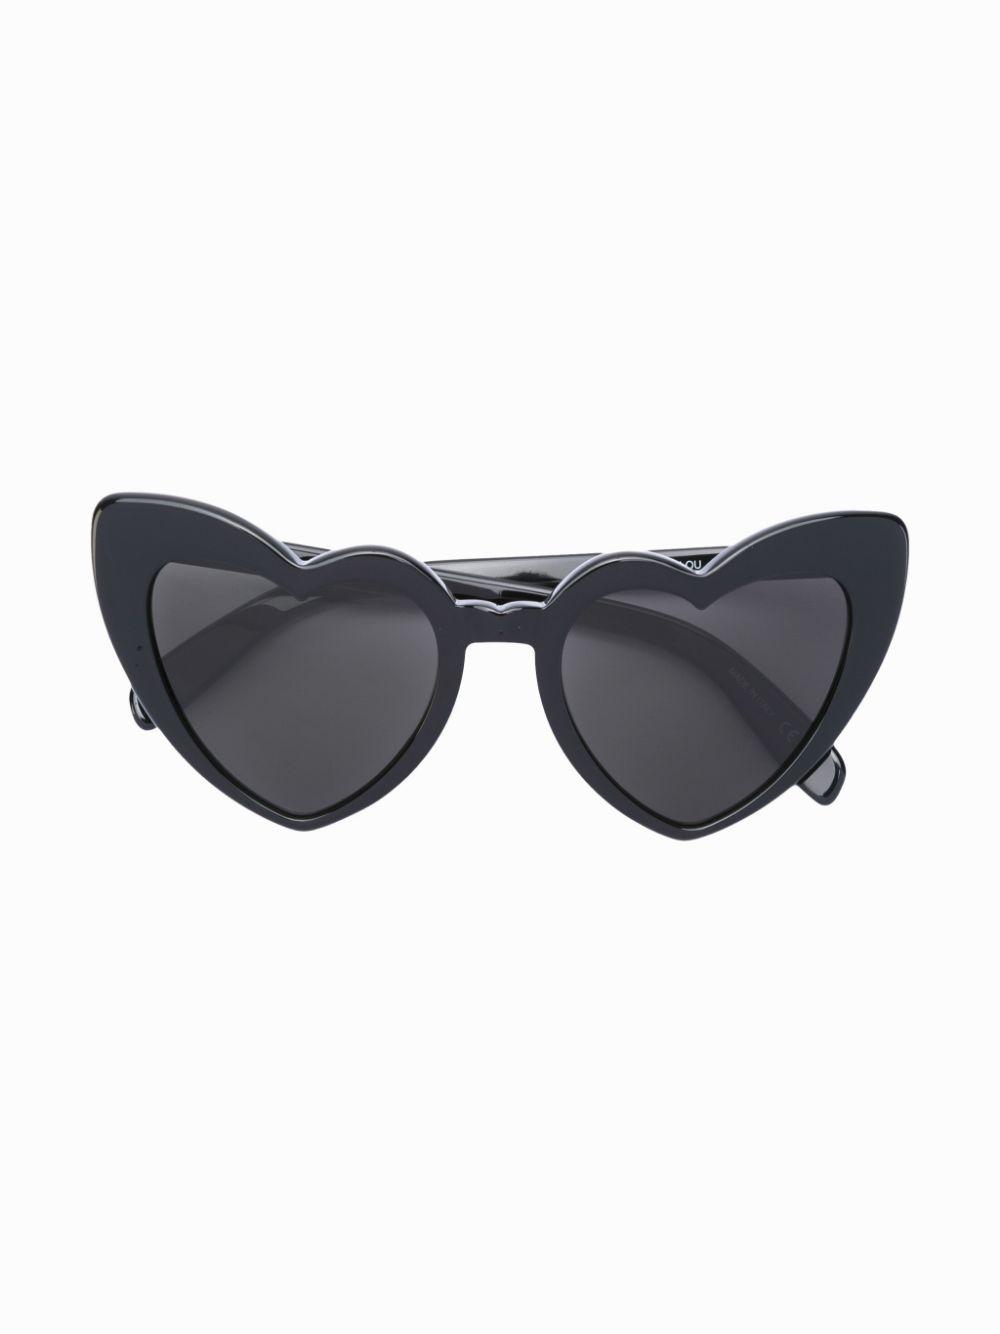 Saint Laurent Loulou Sunglasses in Black - Save 40% | Lyst